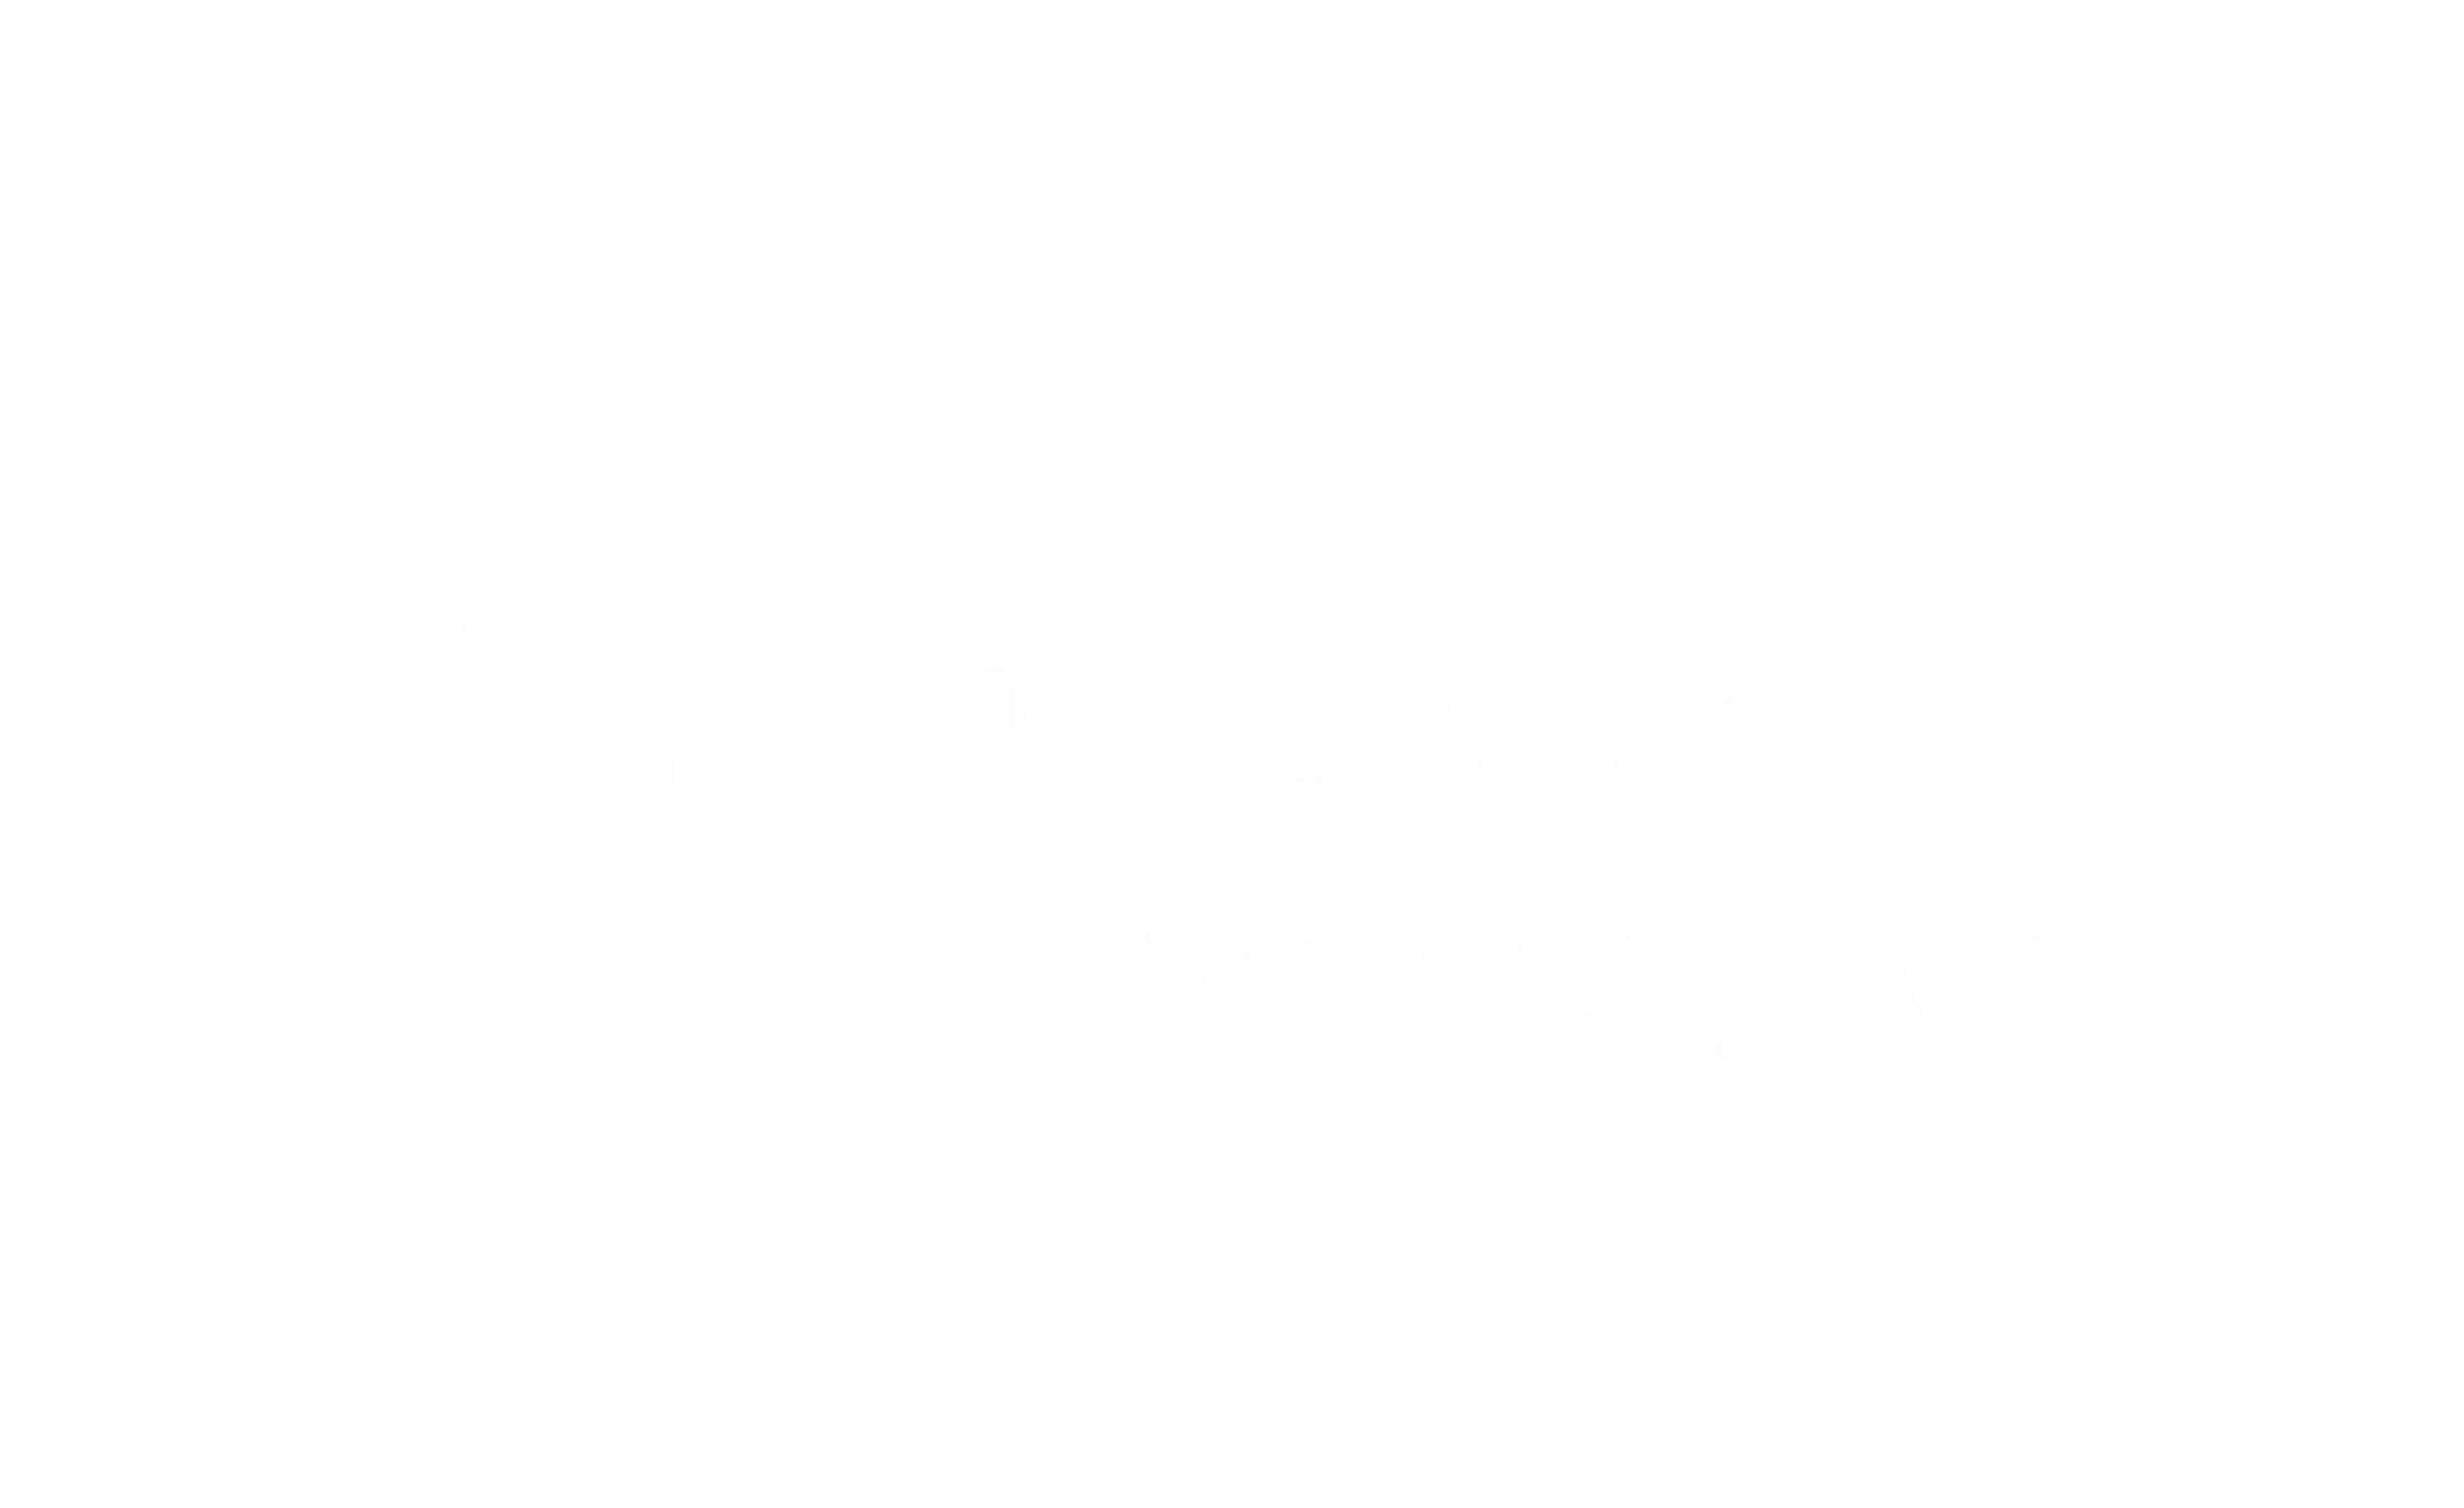 Merkelbag adviesgroep verzekeren logo